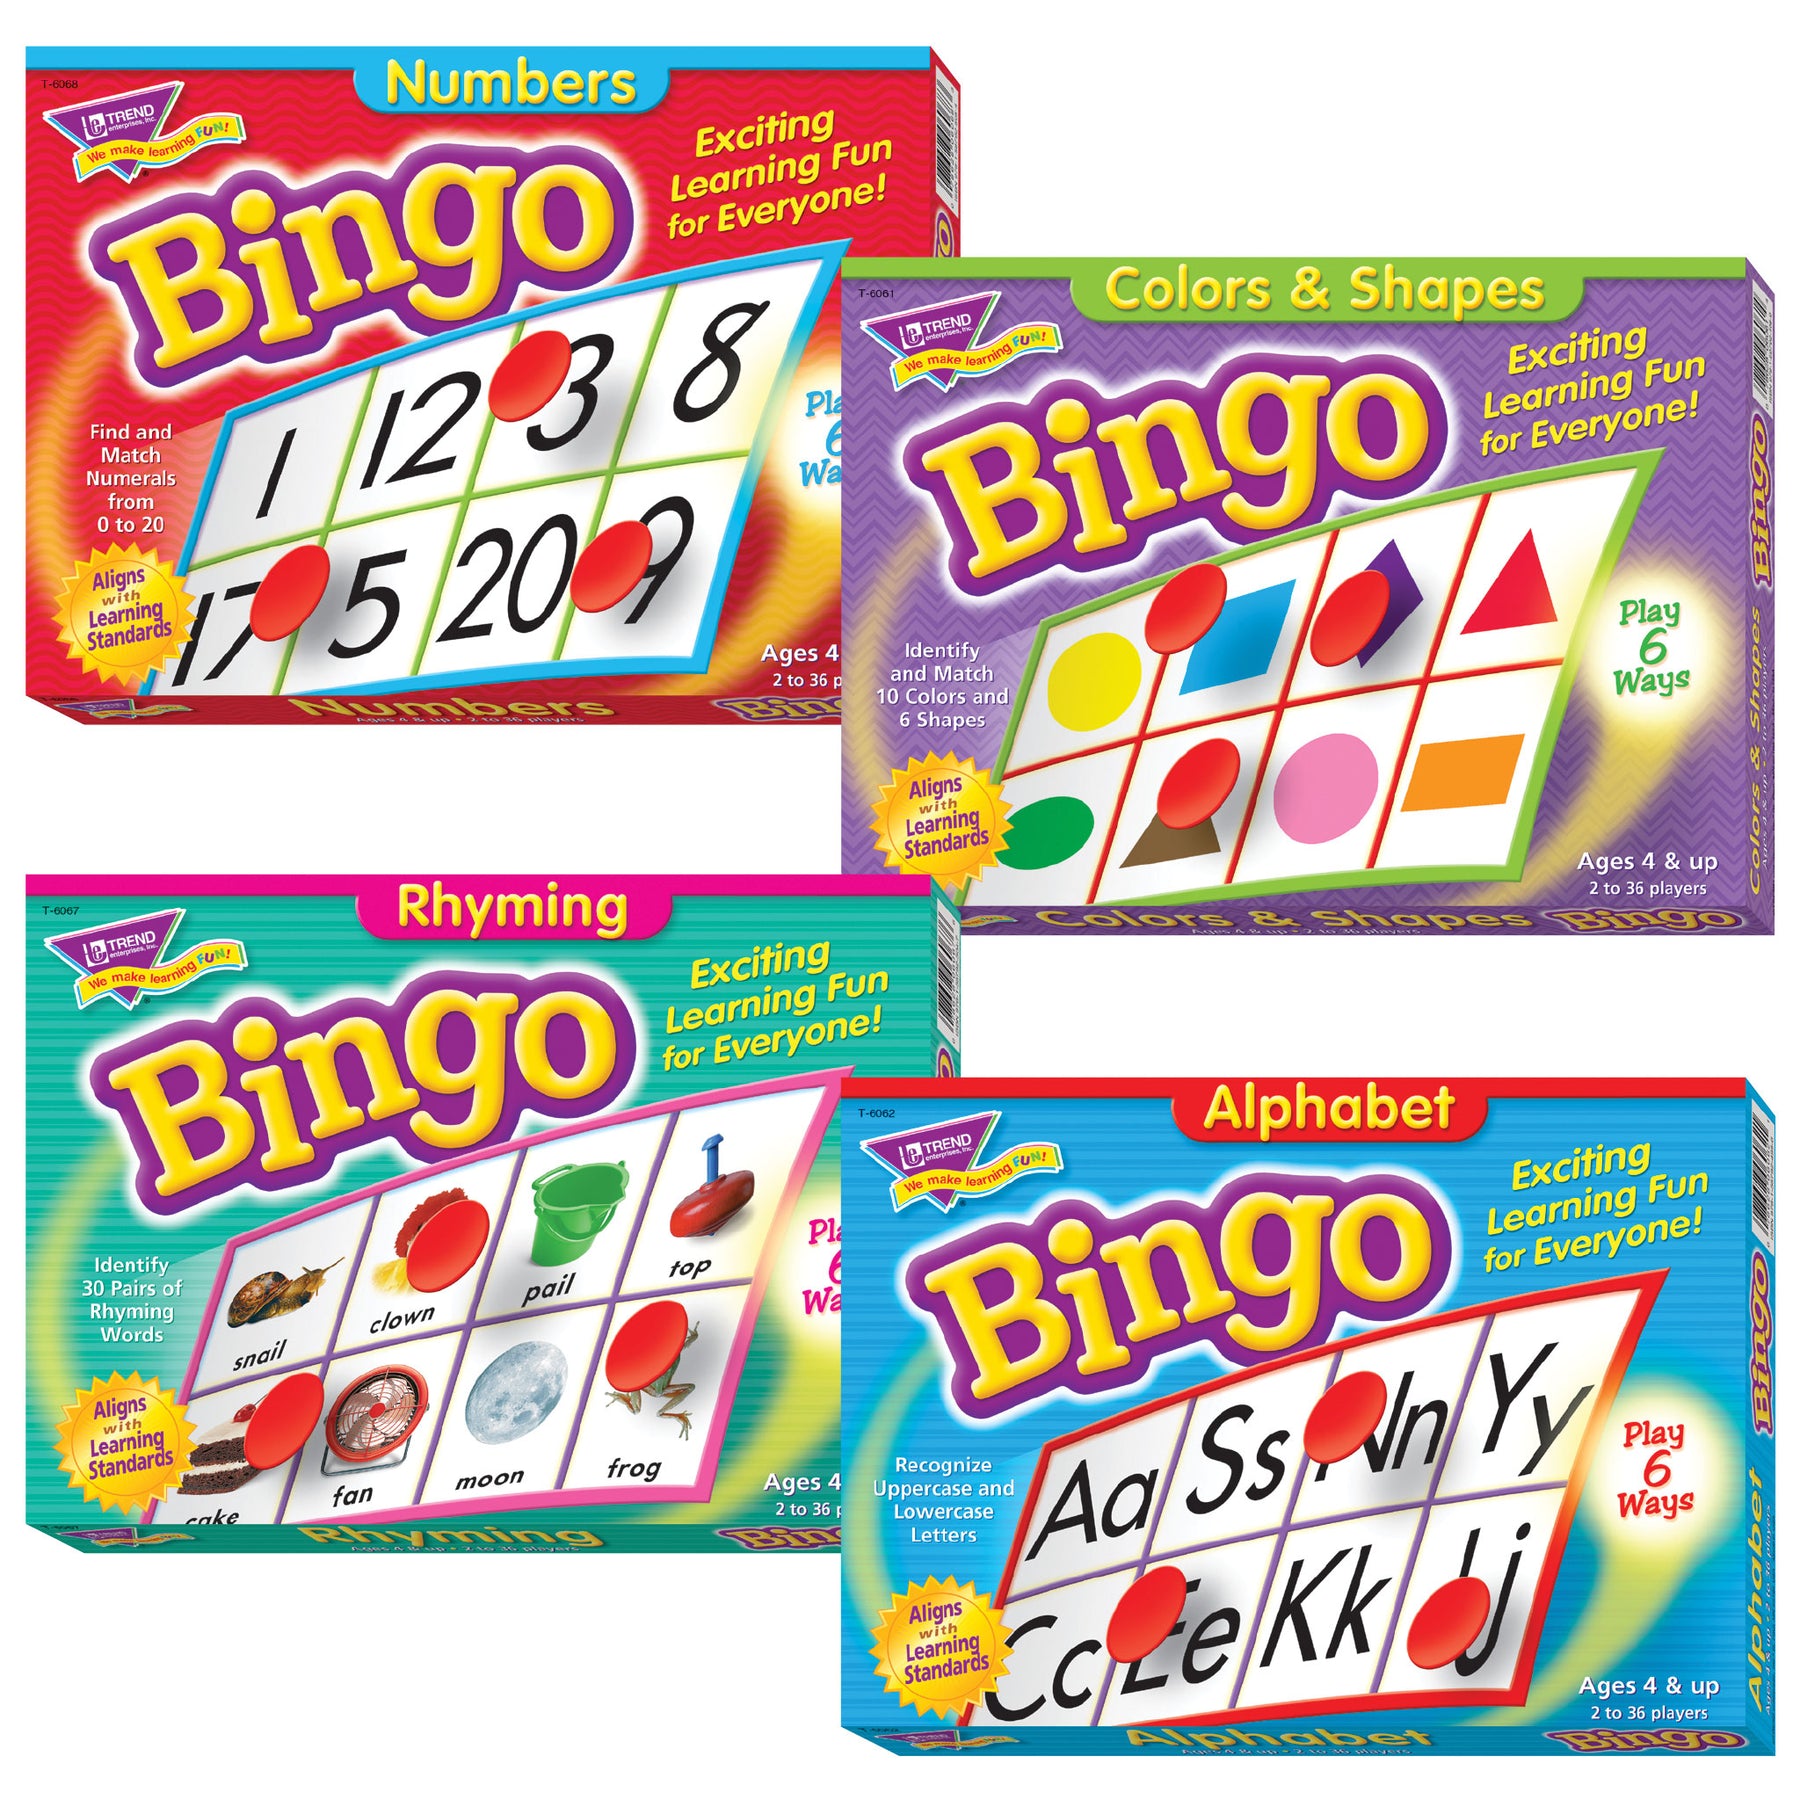 Jogo Meu Primeiro Bingo - T0042 - Loopi Toys - Kits e Gifts